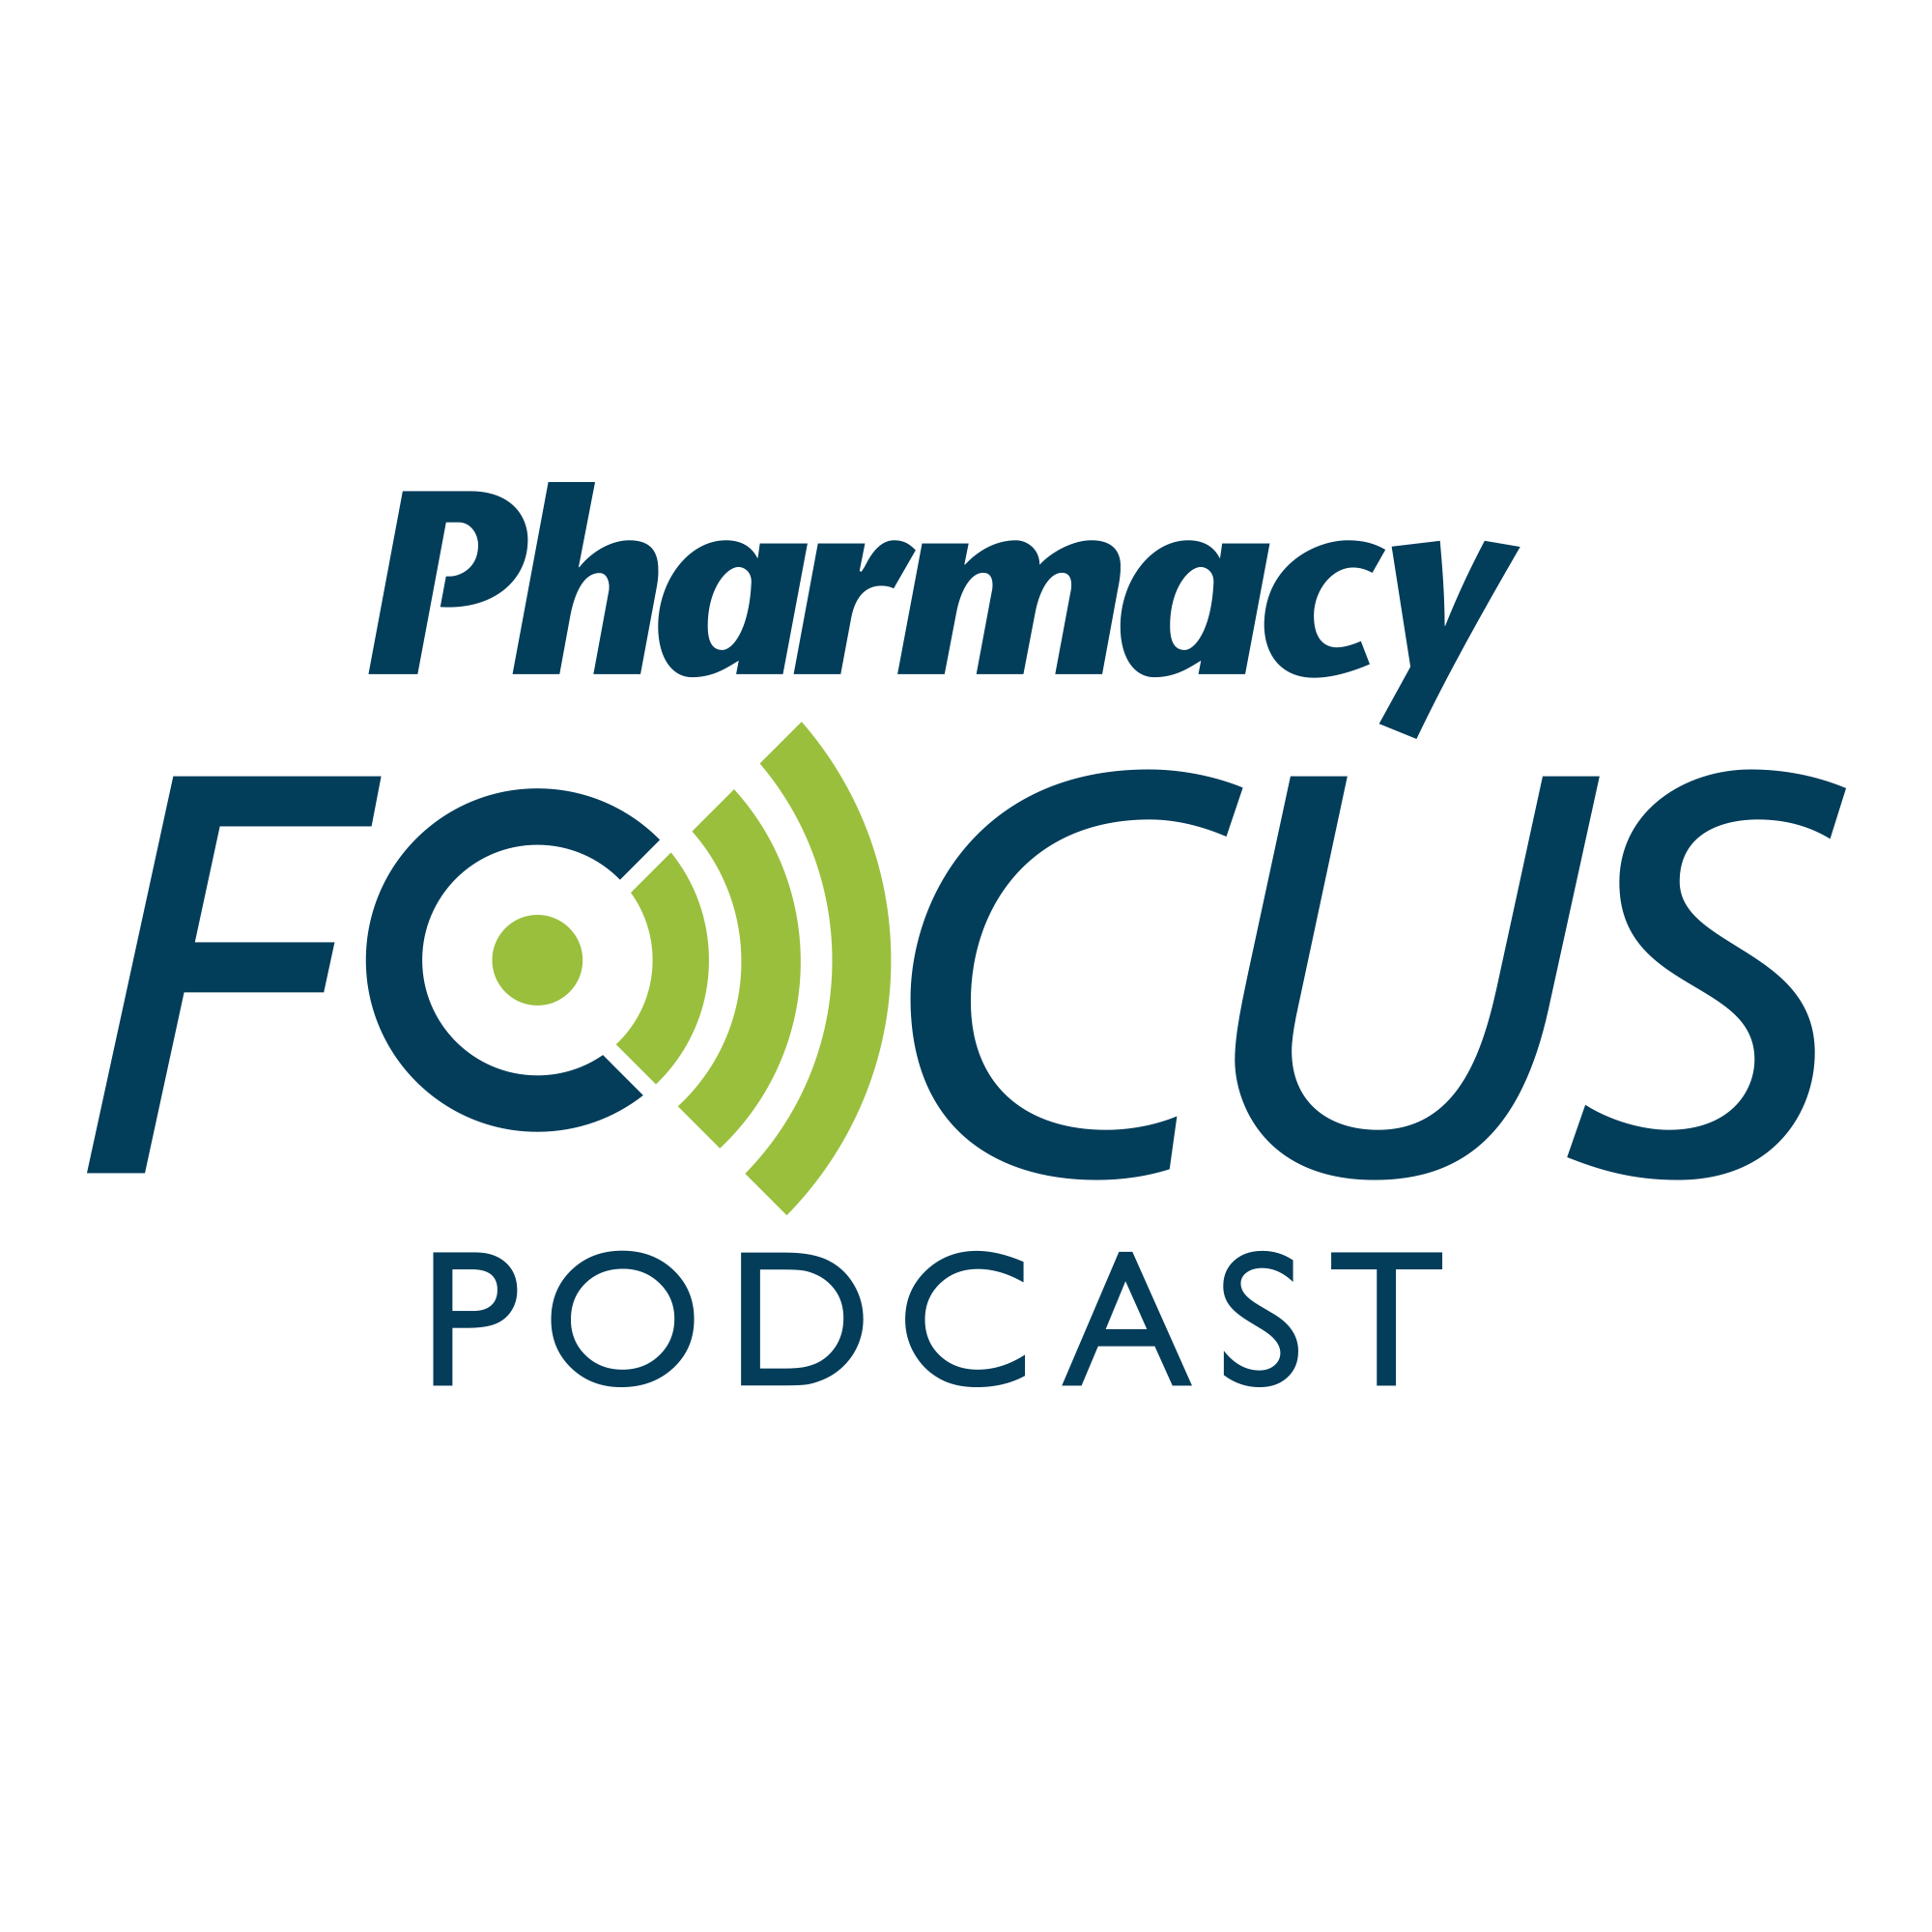 Pharmacy Focus Episode 42: Current Mental Health Treatment Needs